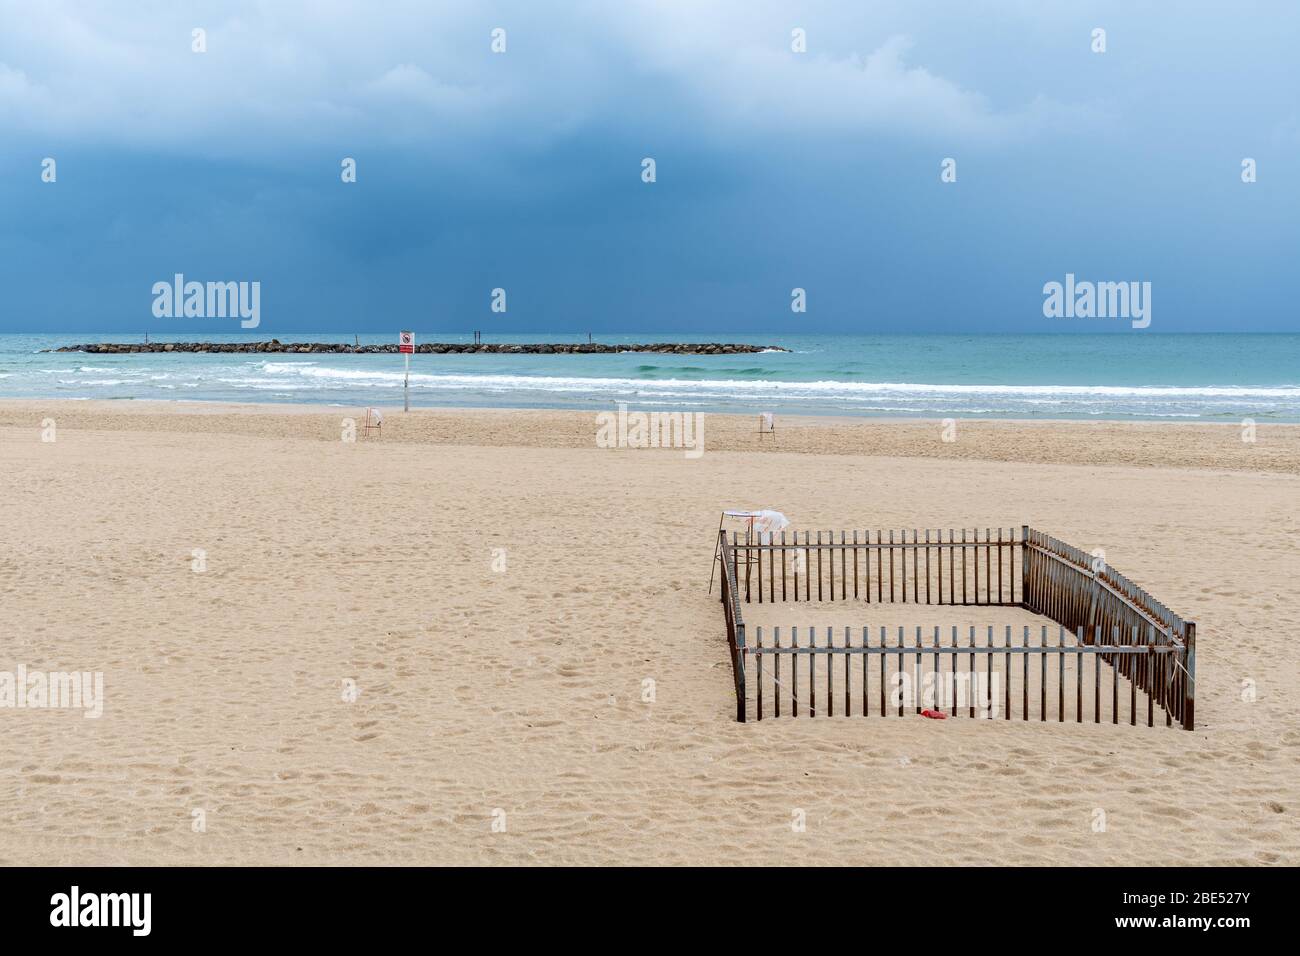 The beach of Tel Aviv on a cloudy day Stock Photo